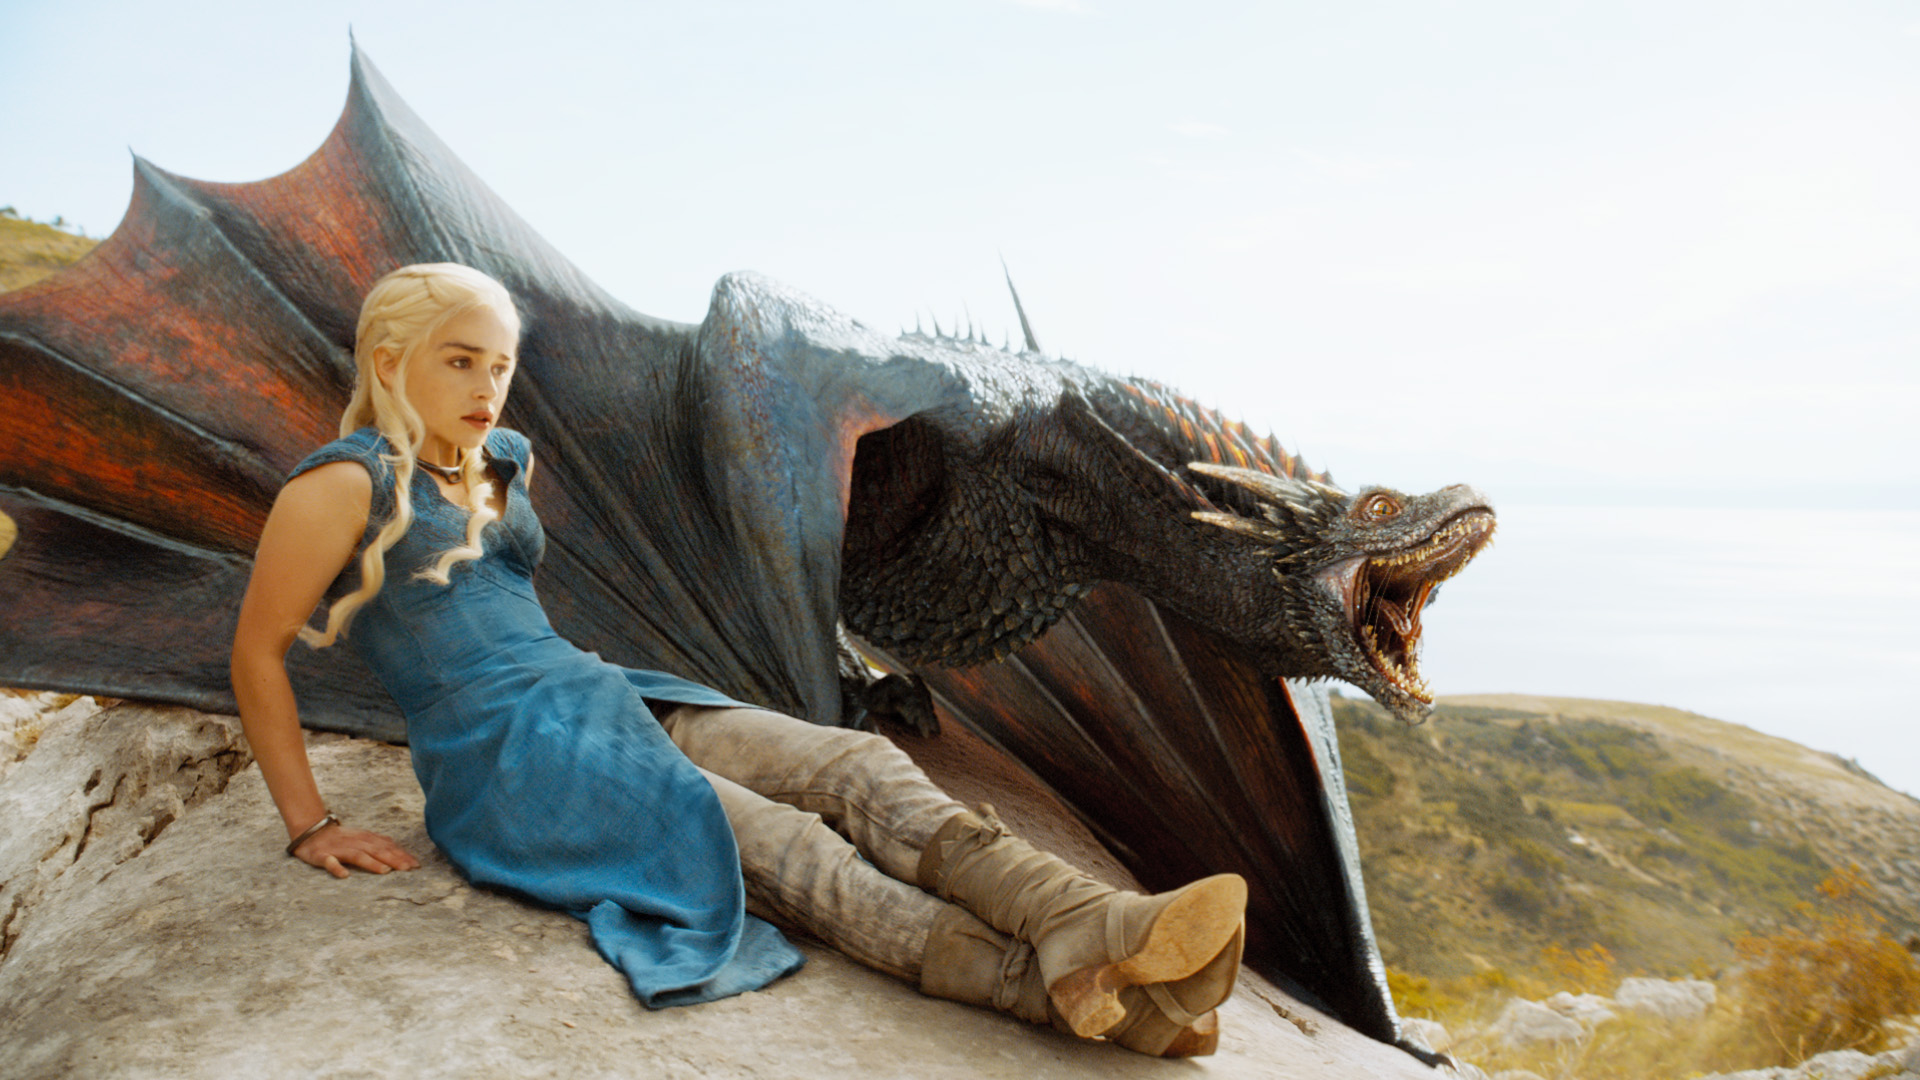 General 1920x1080 Game of Thrones Daenerys Targaryen dragon fantasy girl blonde legs crossed women outdoors outdoors TV series creature actress Wyvern